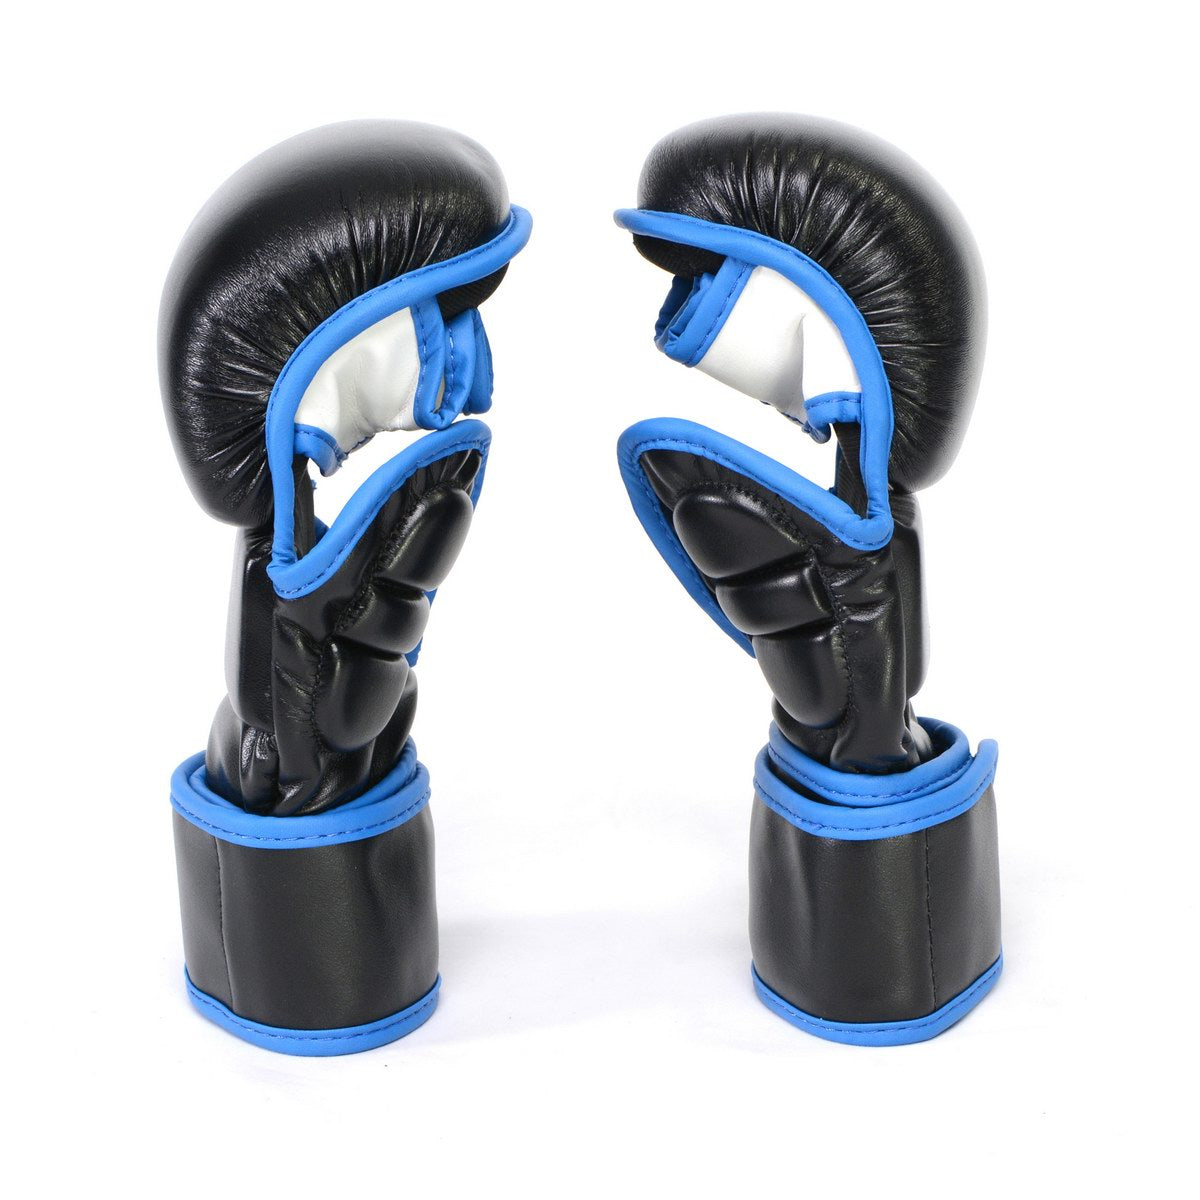 X-Fitness XF2001 7 oz MMA Hybrid Sparring Gloves-BLK/BLUE